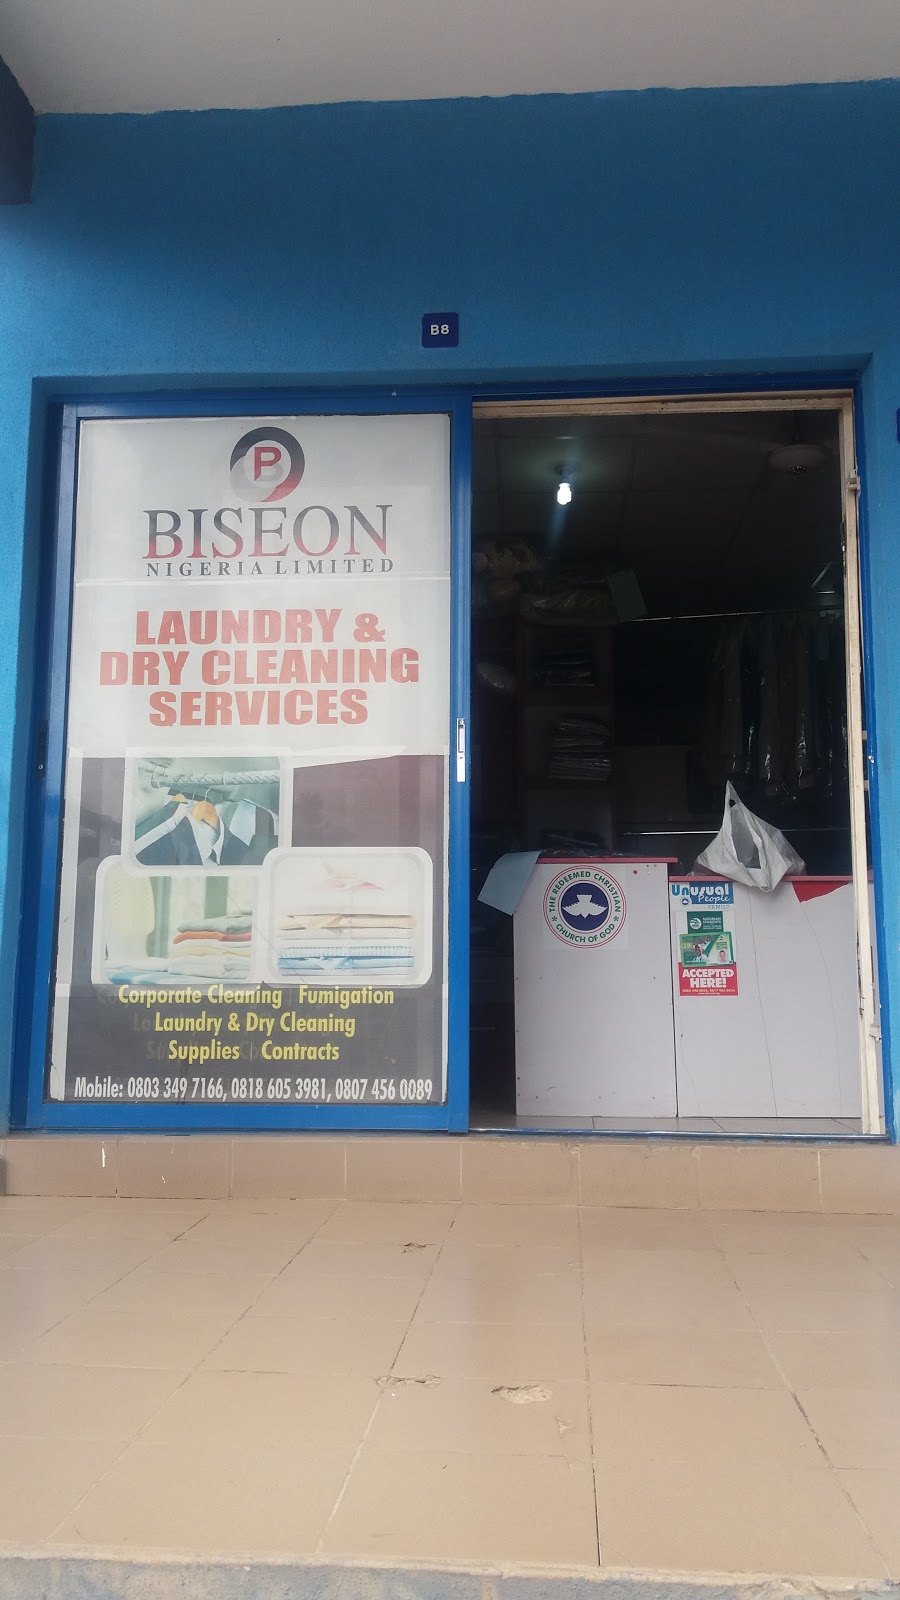 Biseon Nigeria Limited